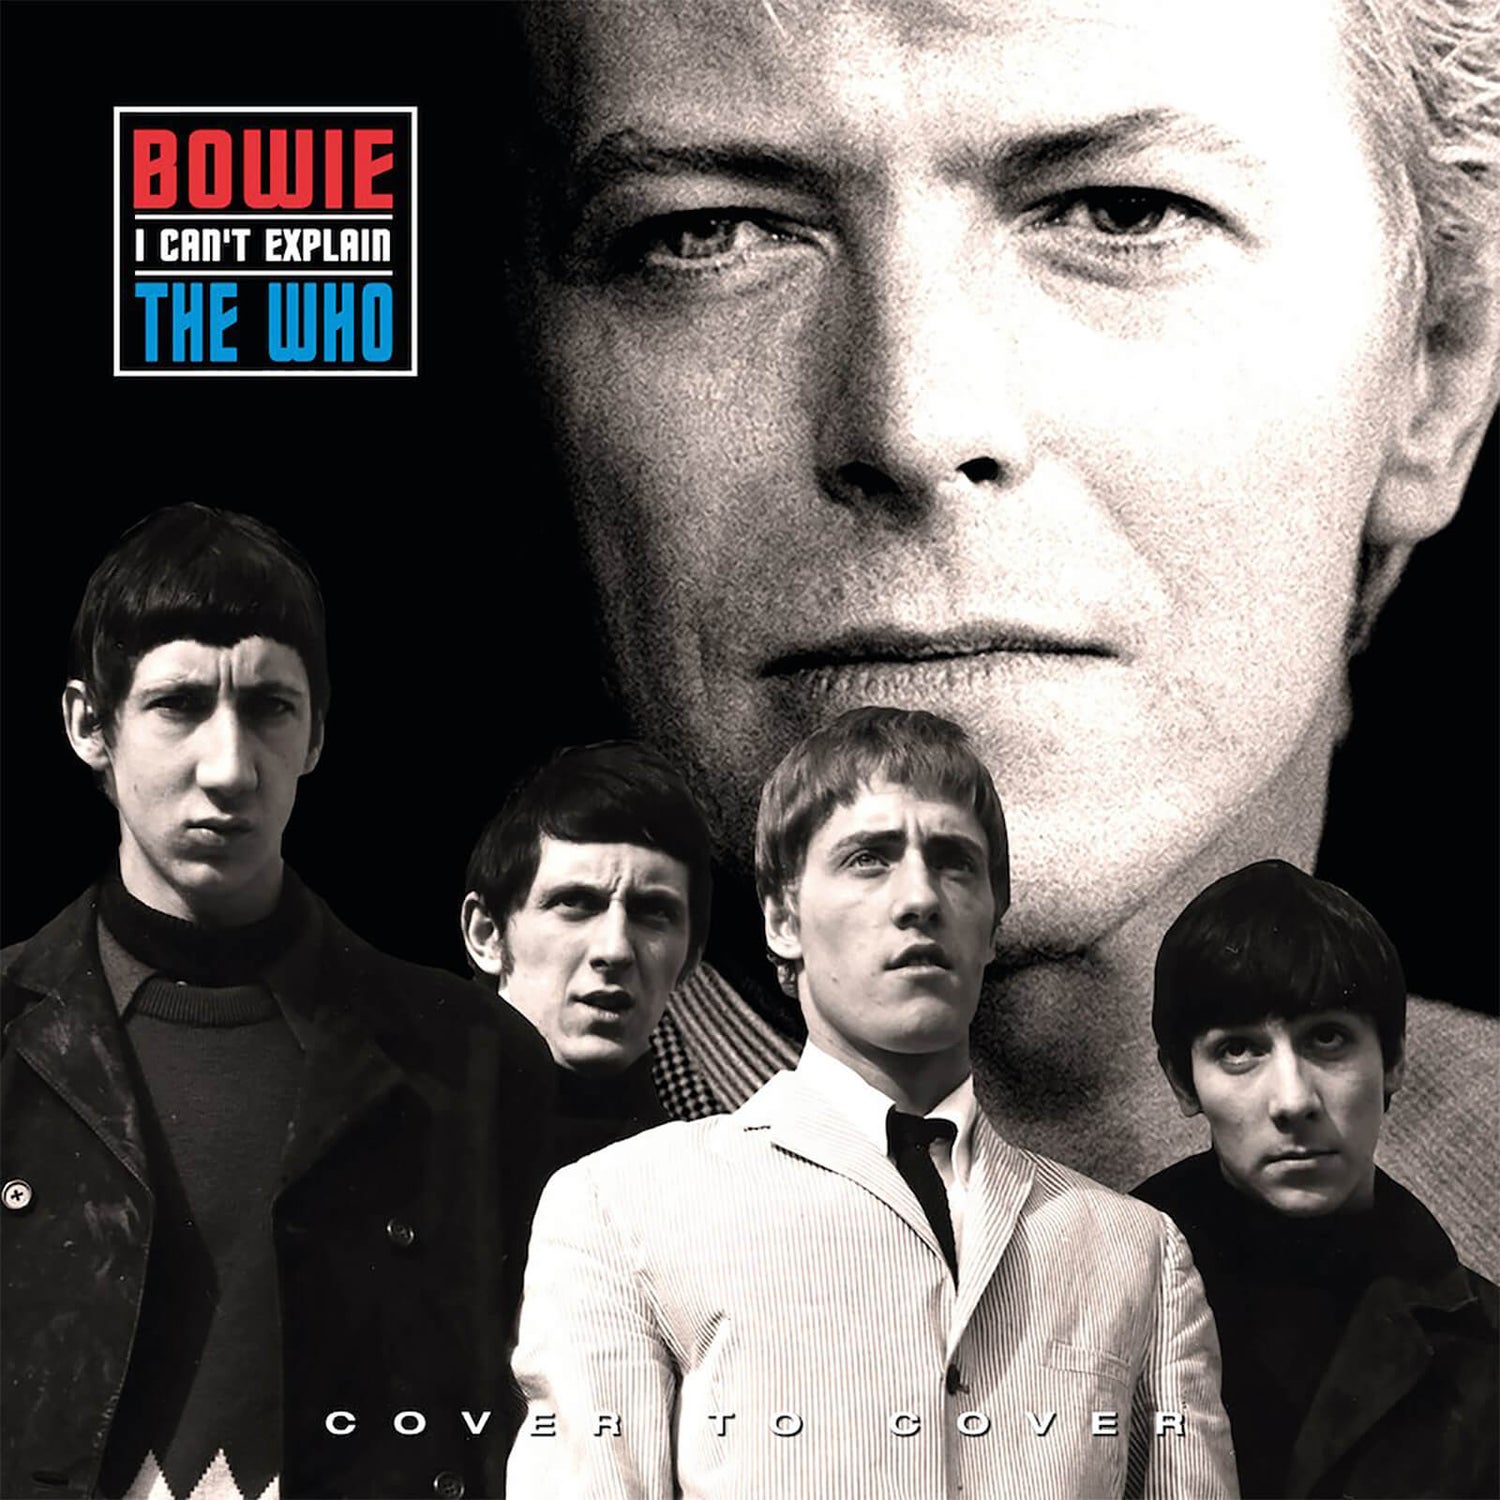 David Bowie / The Who - I Can't Explain (Vinyle rouge) 18 cm